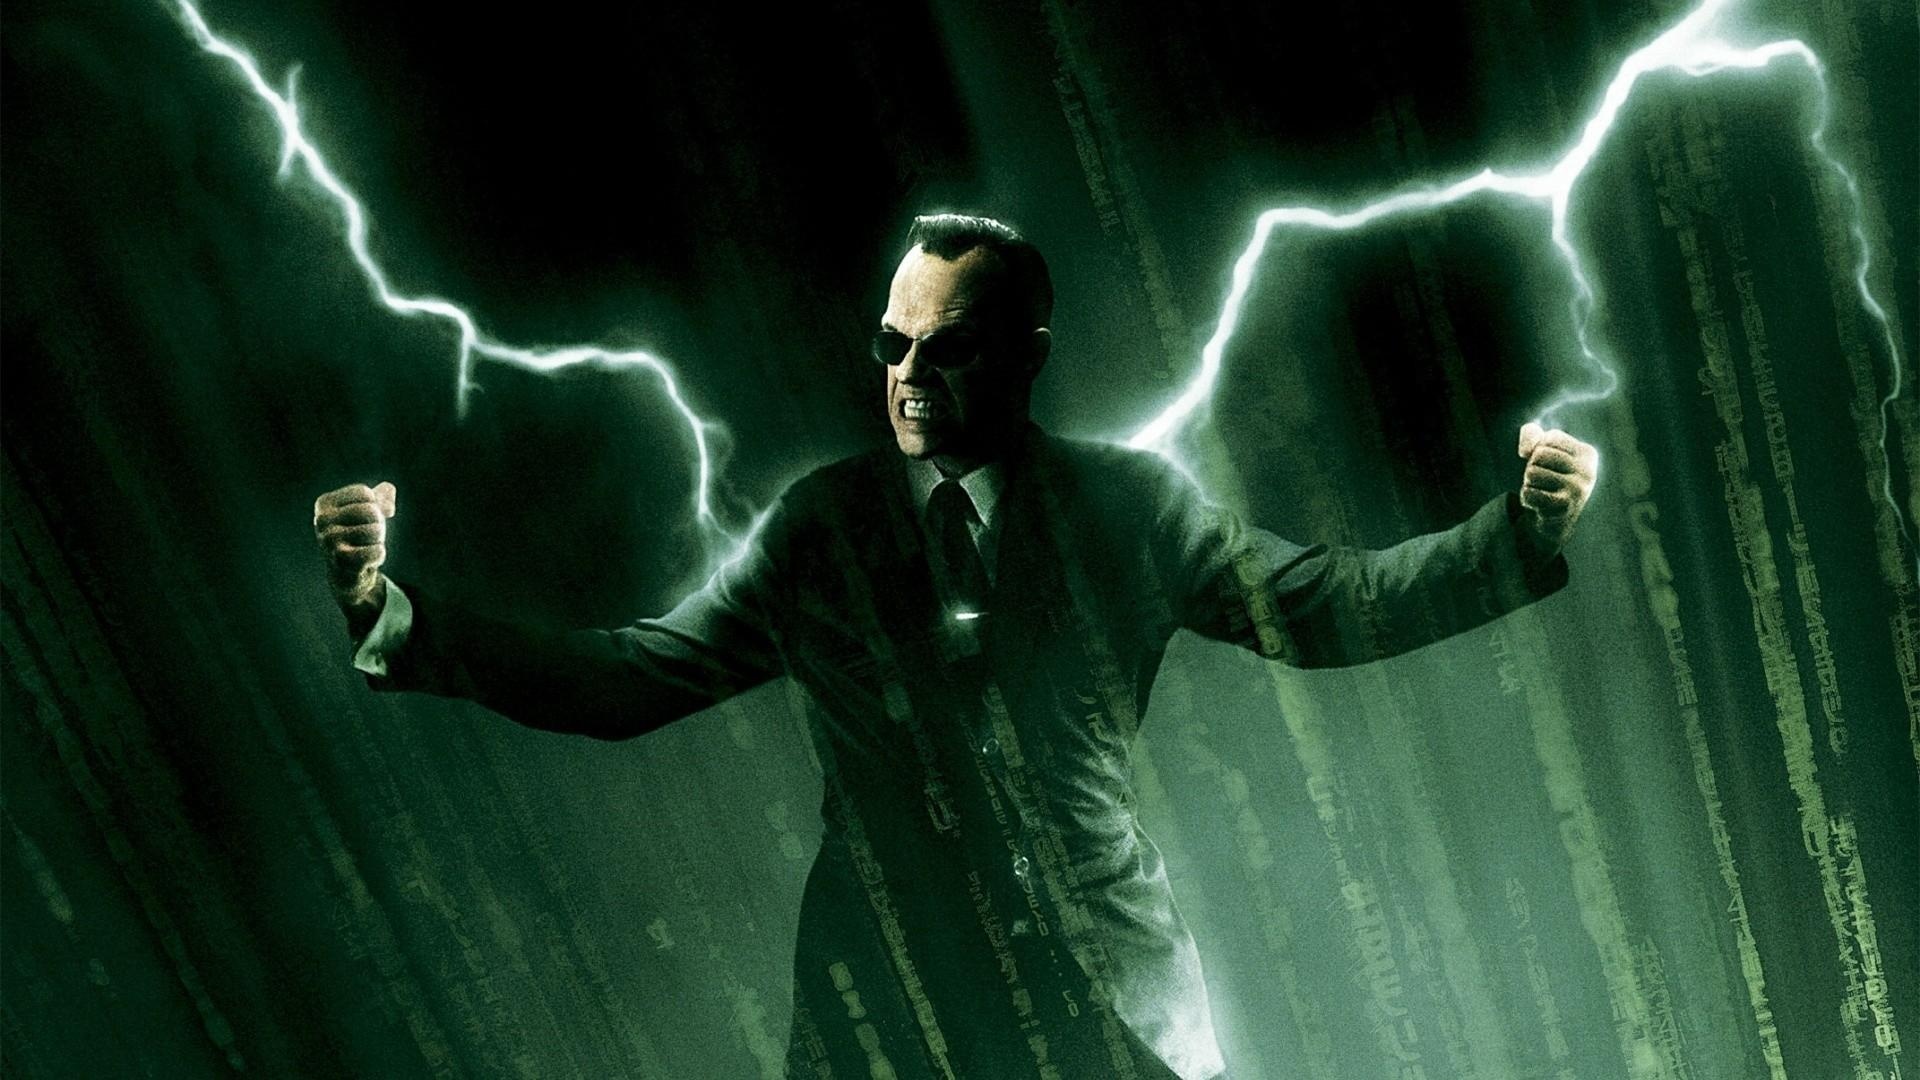 Agent Smith (The Matrix), HD wallpaper background, Memorable character, Iconic film, 1920x1080 Full HD Desktop